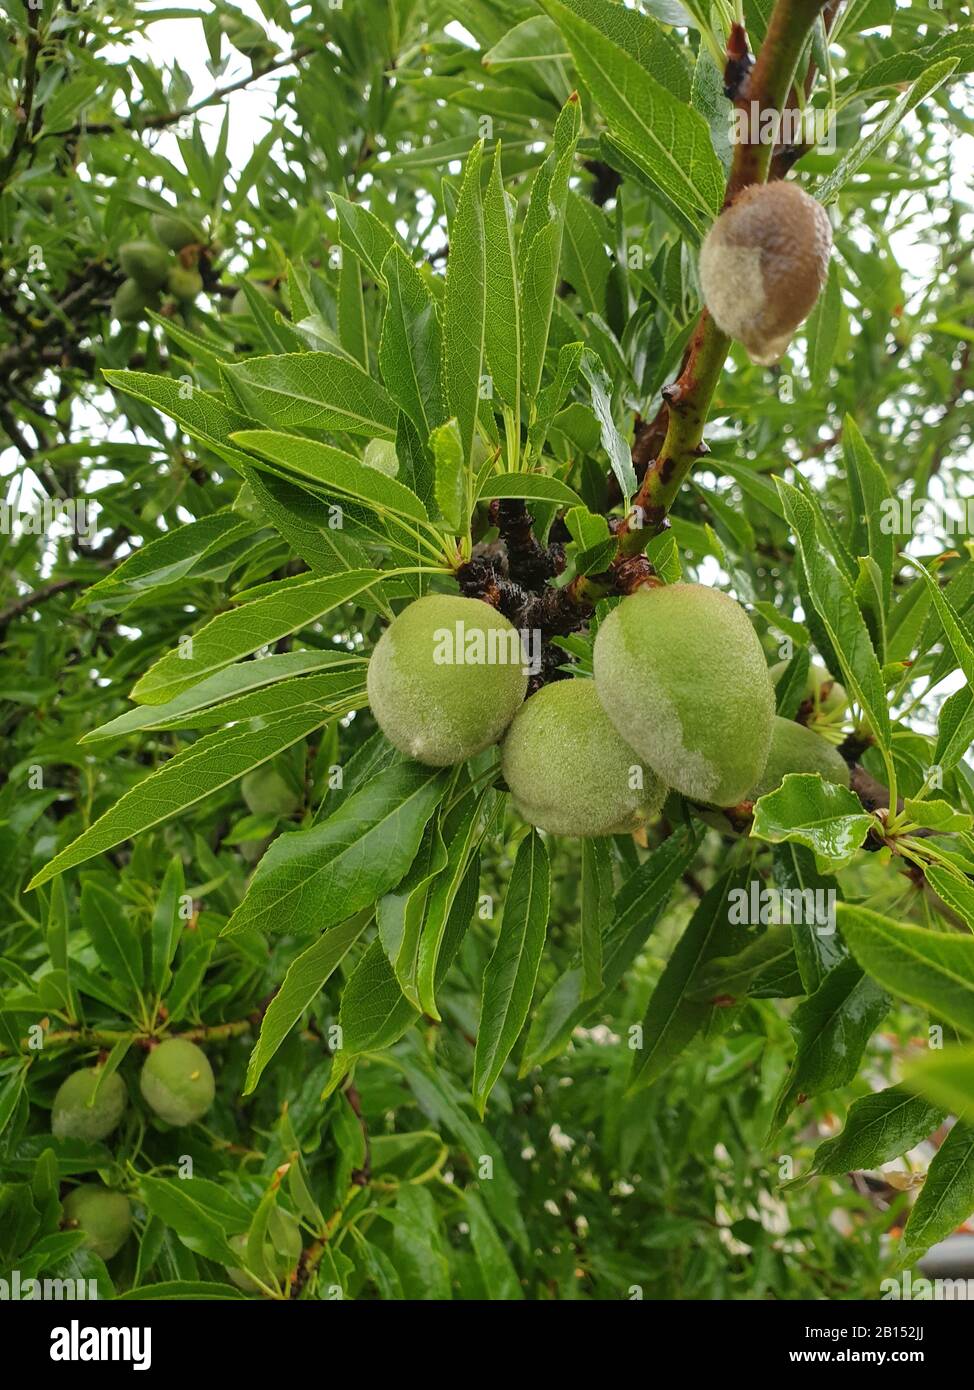 Almond (Prunus dulcis, Prunus amygdalus, Amygdalus communis, Amygdalus dulcis), fruits on a tree, Spain, Balearic Islands, Majorca Stock Photo